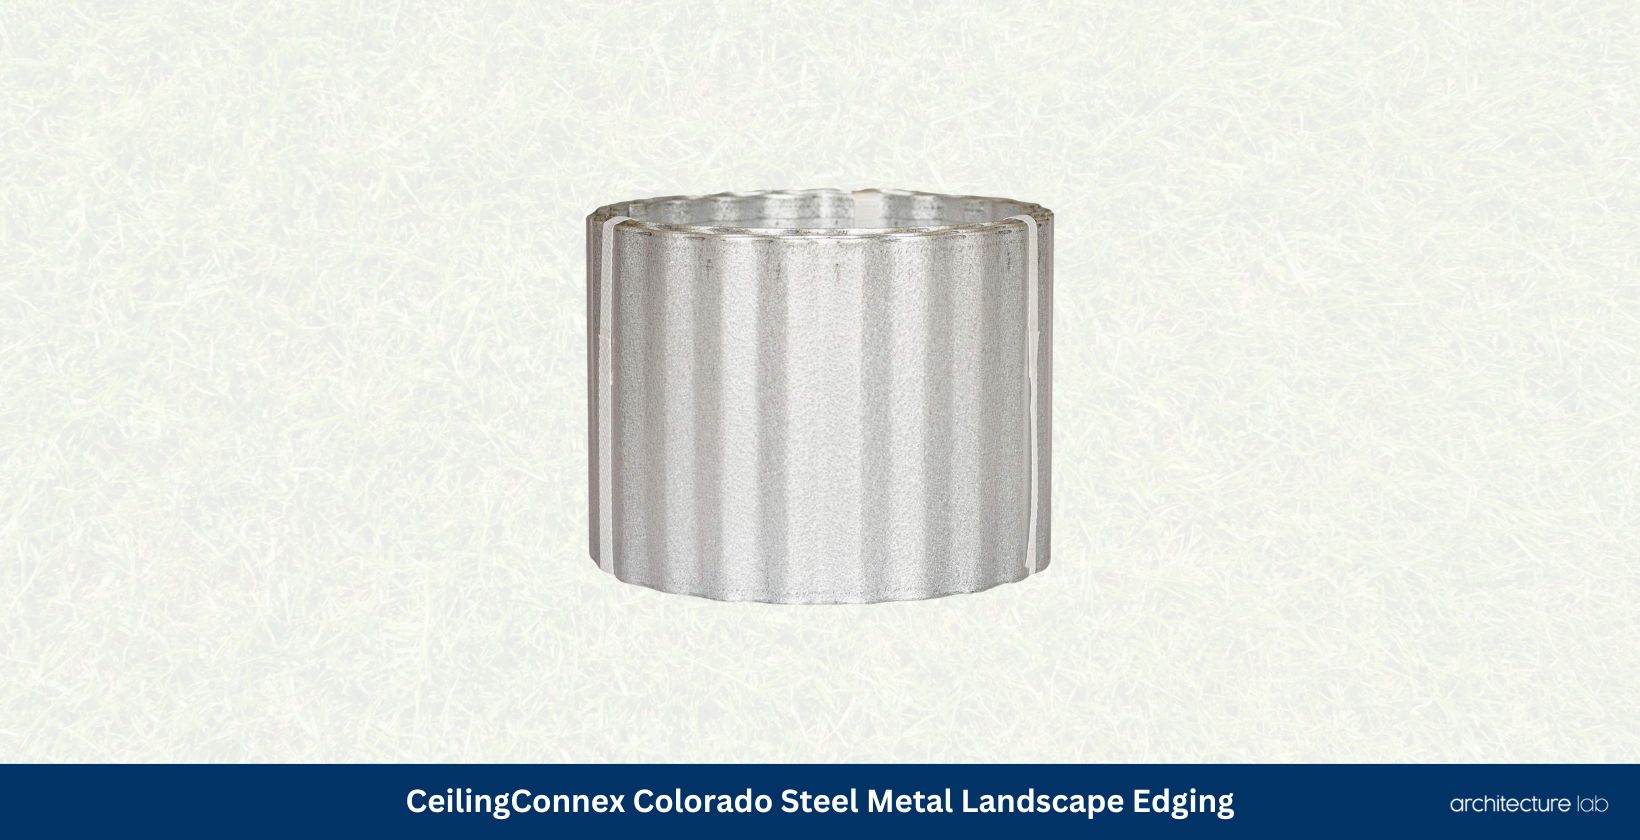 Ceilingconnex colorado steel metal landscape edging